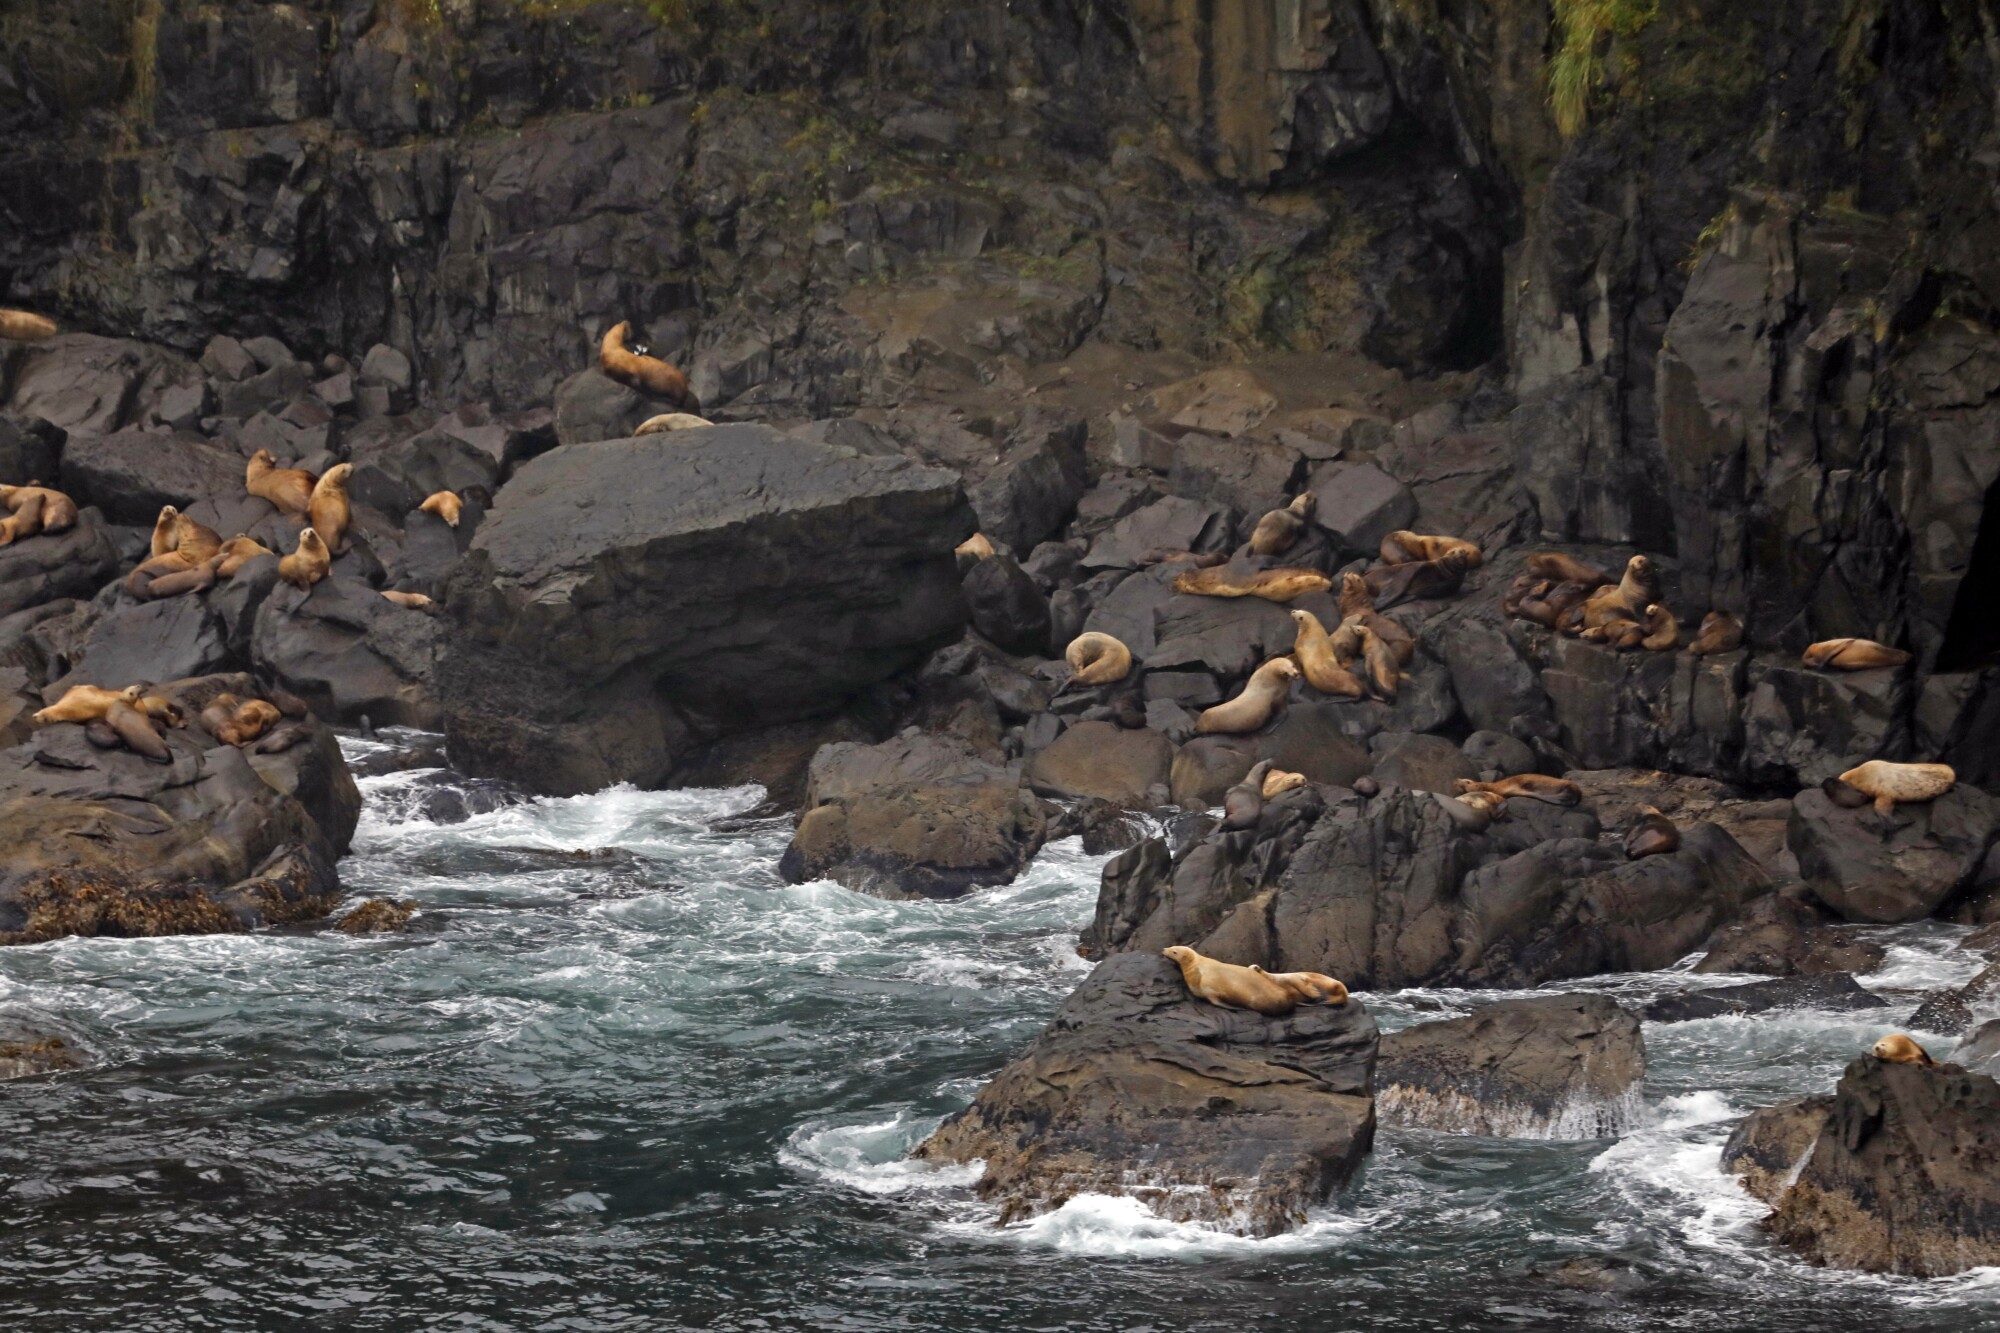 About two dozen sea lions lying along on a rocky shore